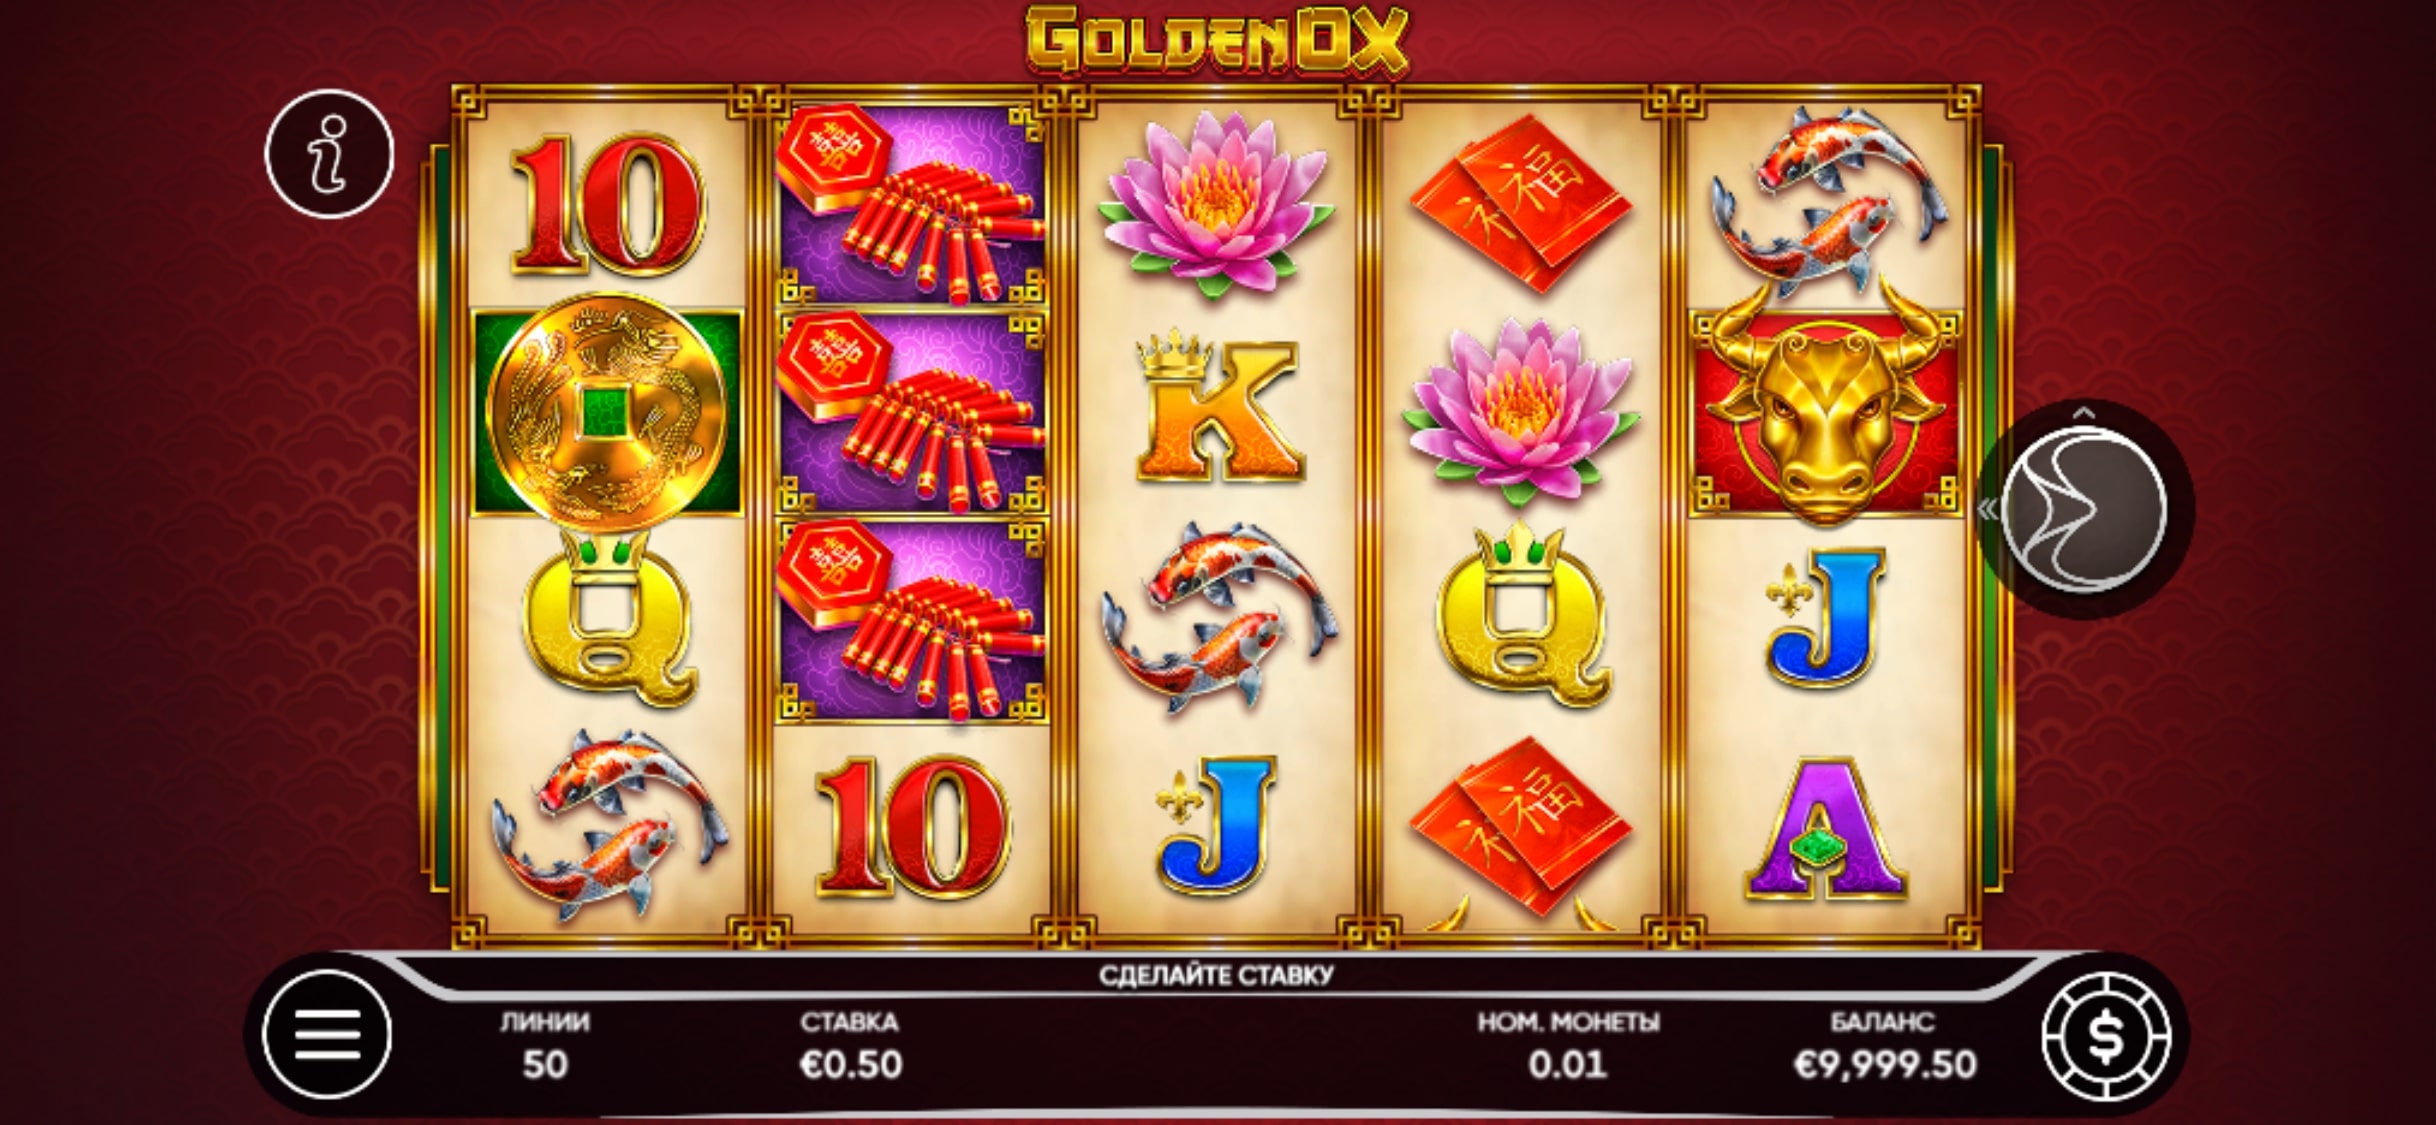 Casinochan Mobile Slot Games Review